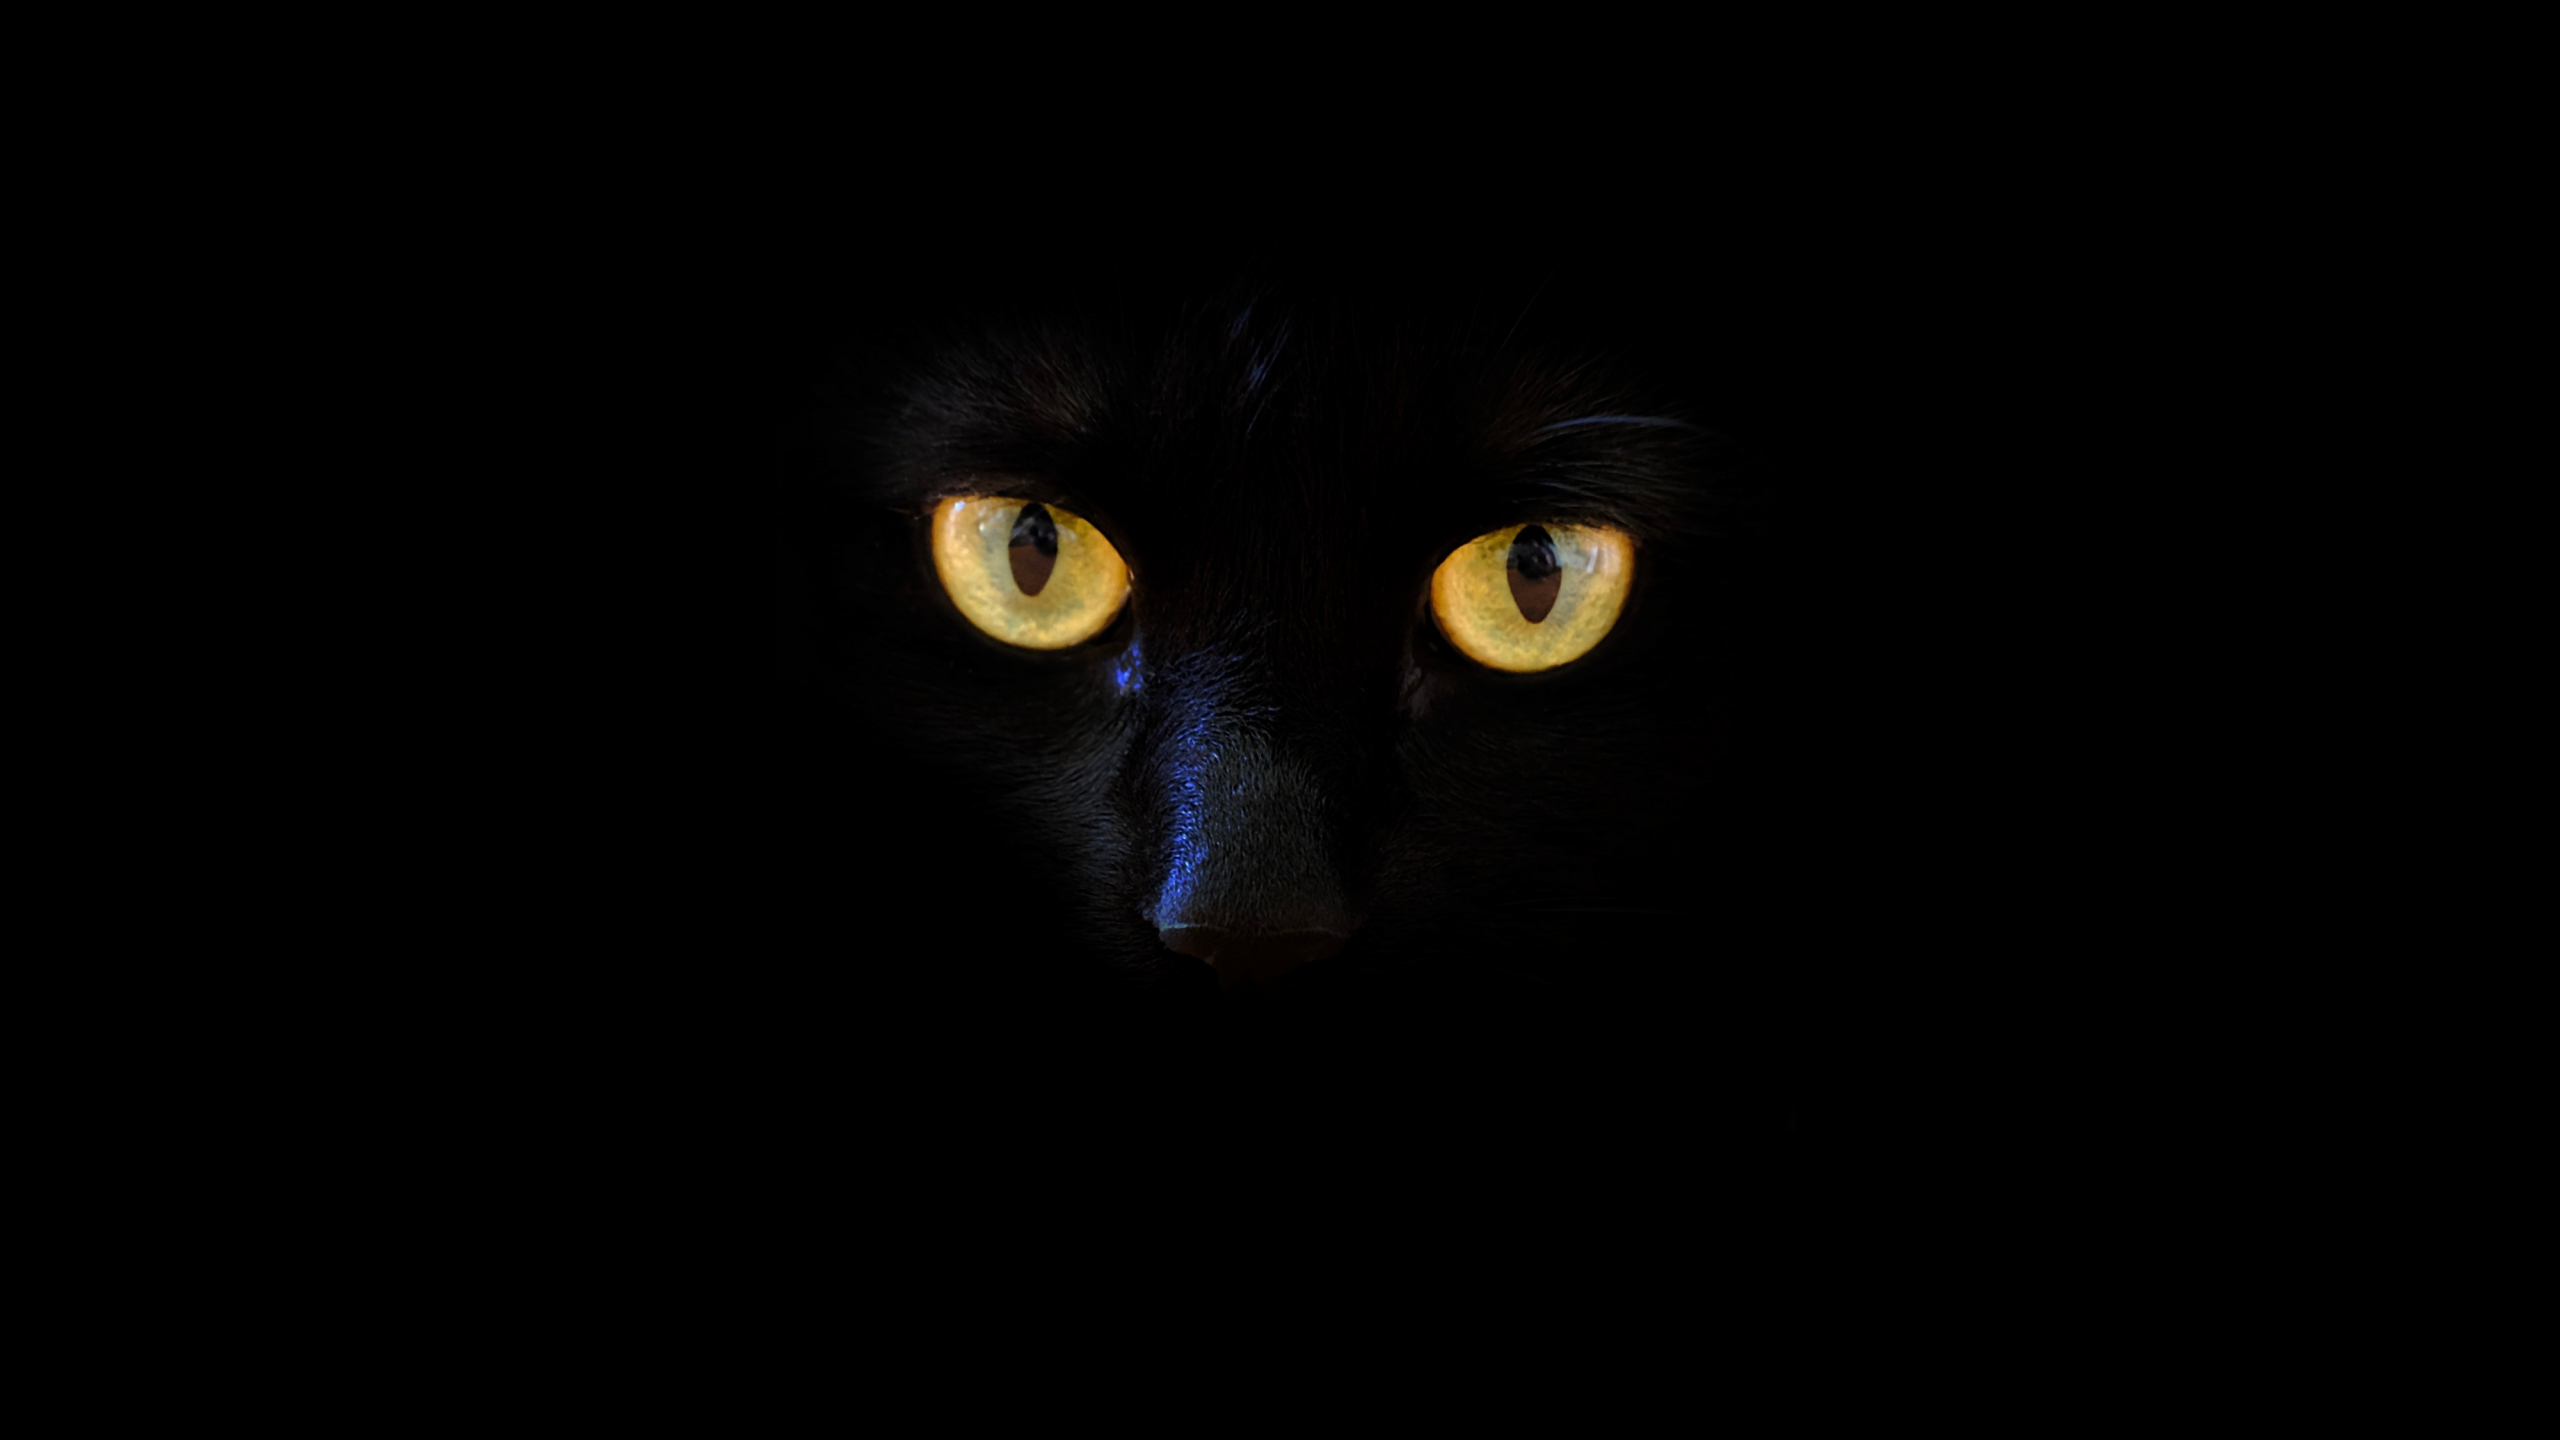 Download wallpaper 2560x1440 black cat, yellow eyes, portrait, dual wide  16:9 2560x1440 hd background, 18010